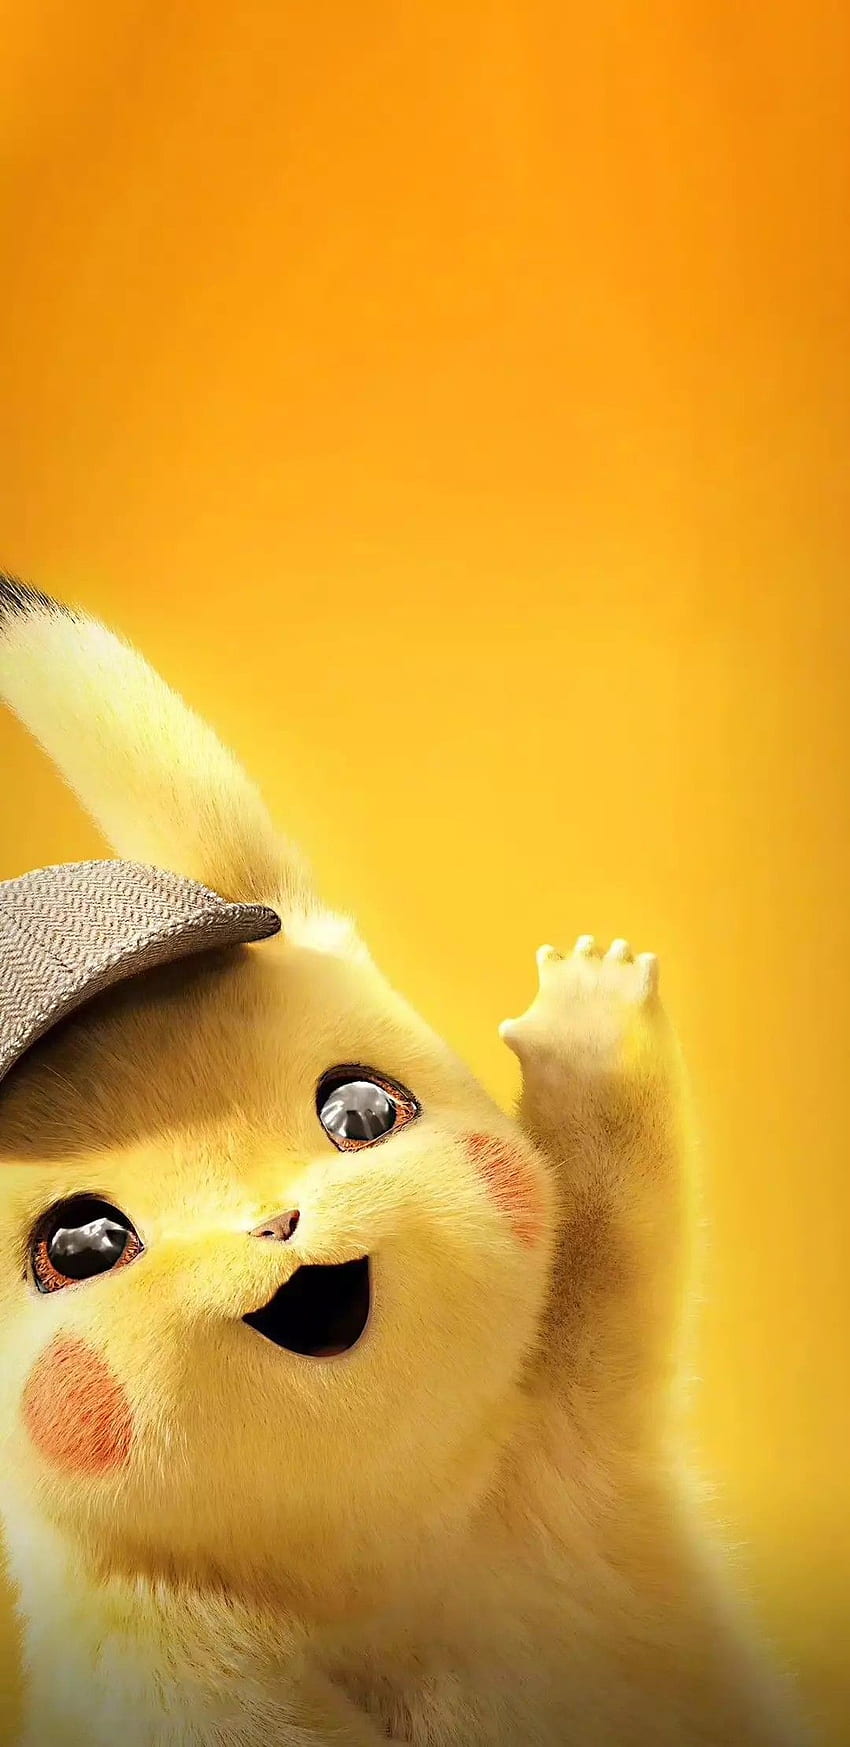 en 2020. Pikachu art, Pikachu , iPhone background disney y Kawaii fondo de pantalla del teléfono